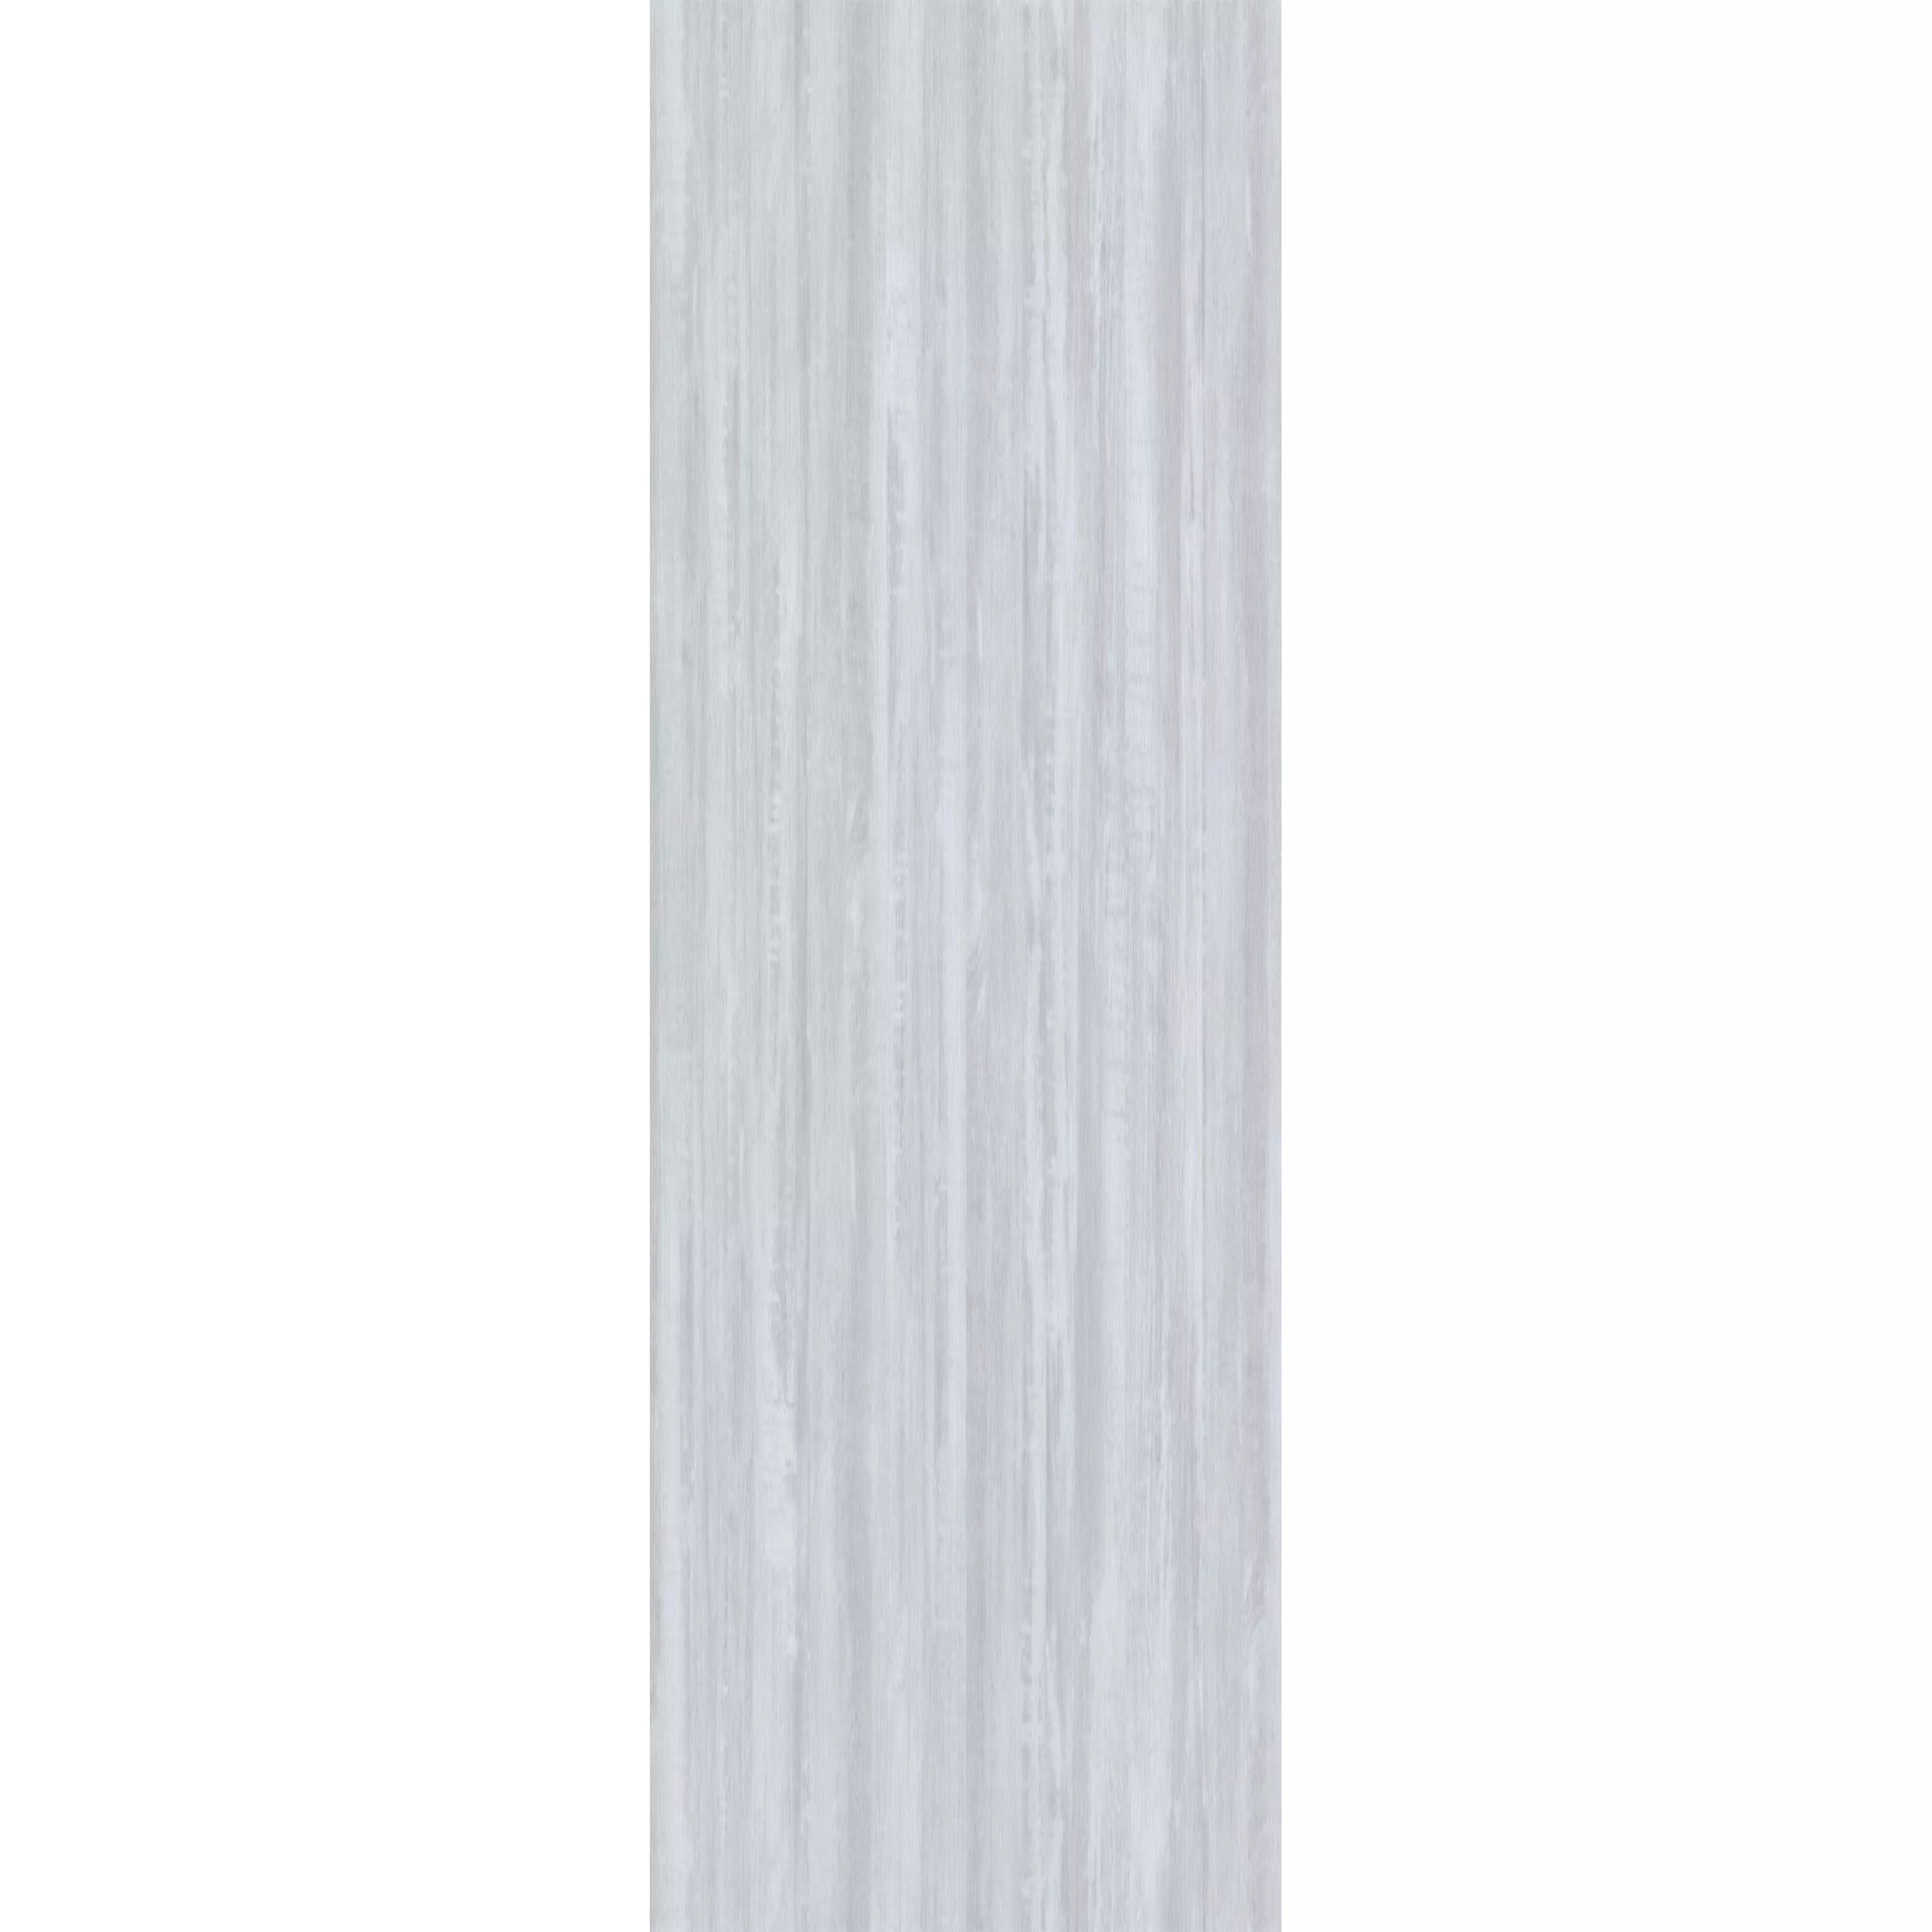 Vinylová Podlaha Klikací Systém Snowwood Bílá 17,2x121cm